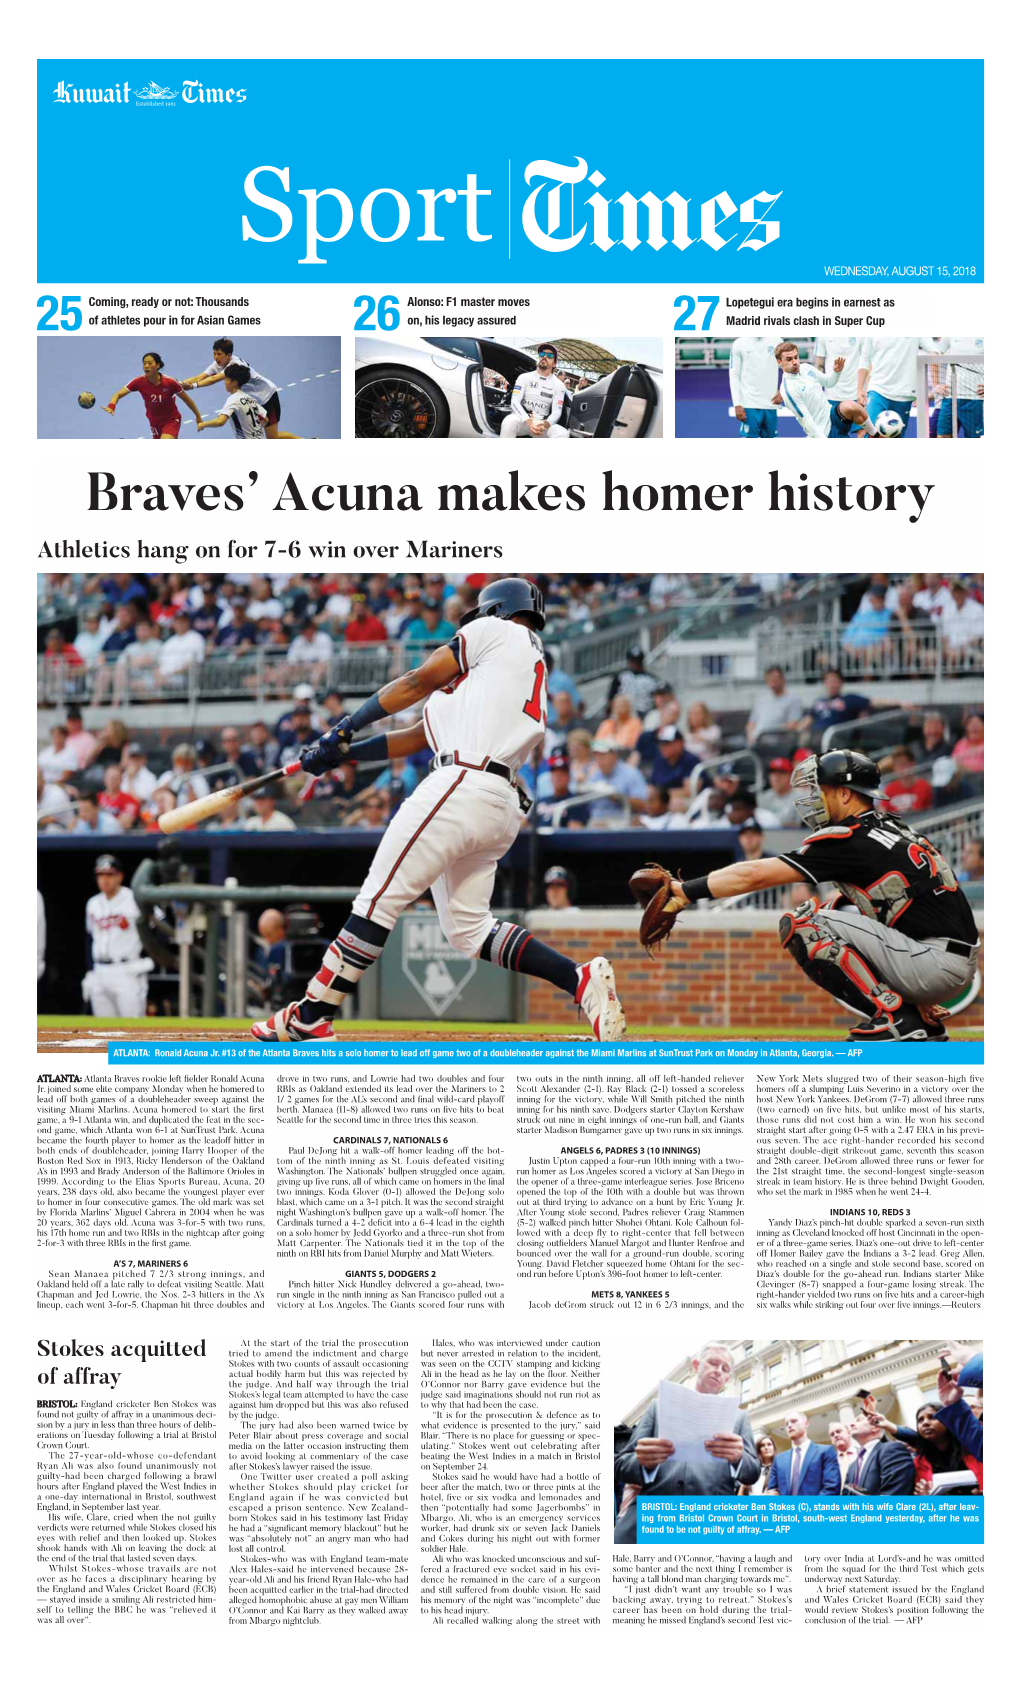 Braves' Acuna Makes Homer History